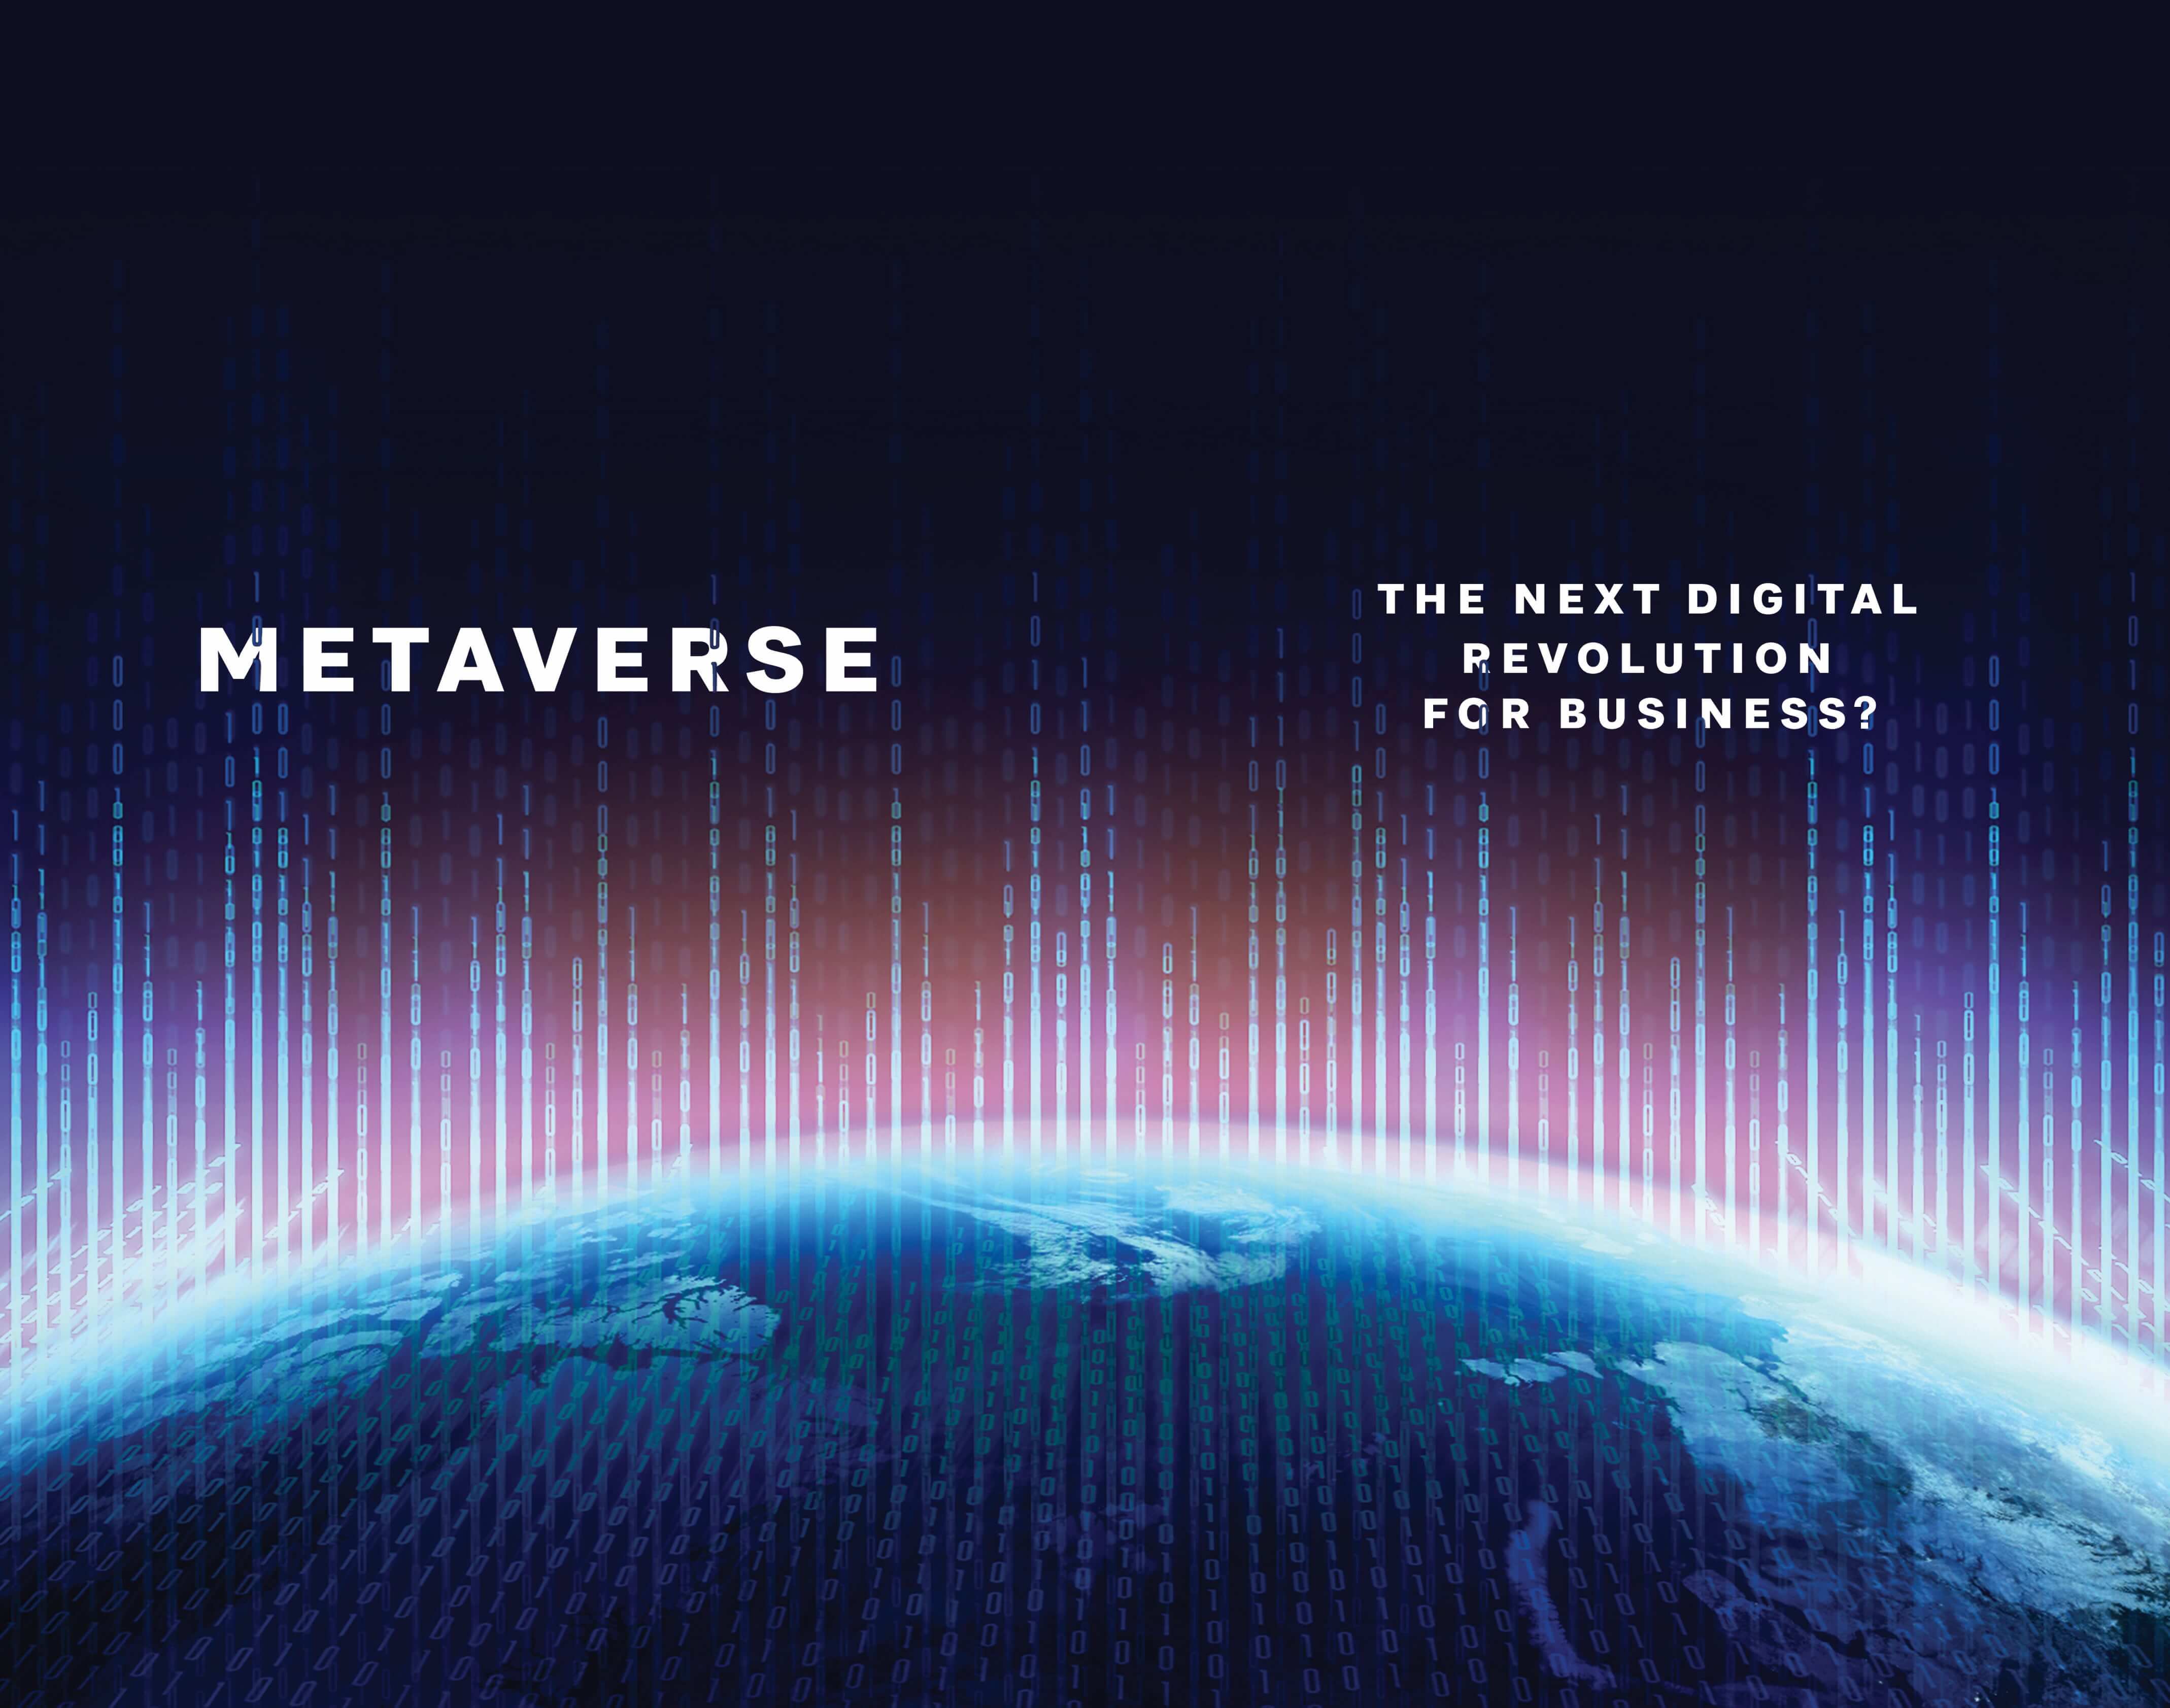 METAVERSE - THE NEXT DIGITAL REVOLUTION FOR BUSINESS?